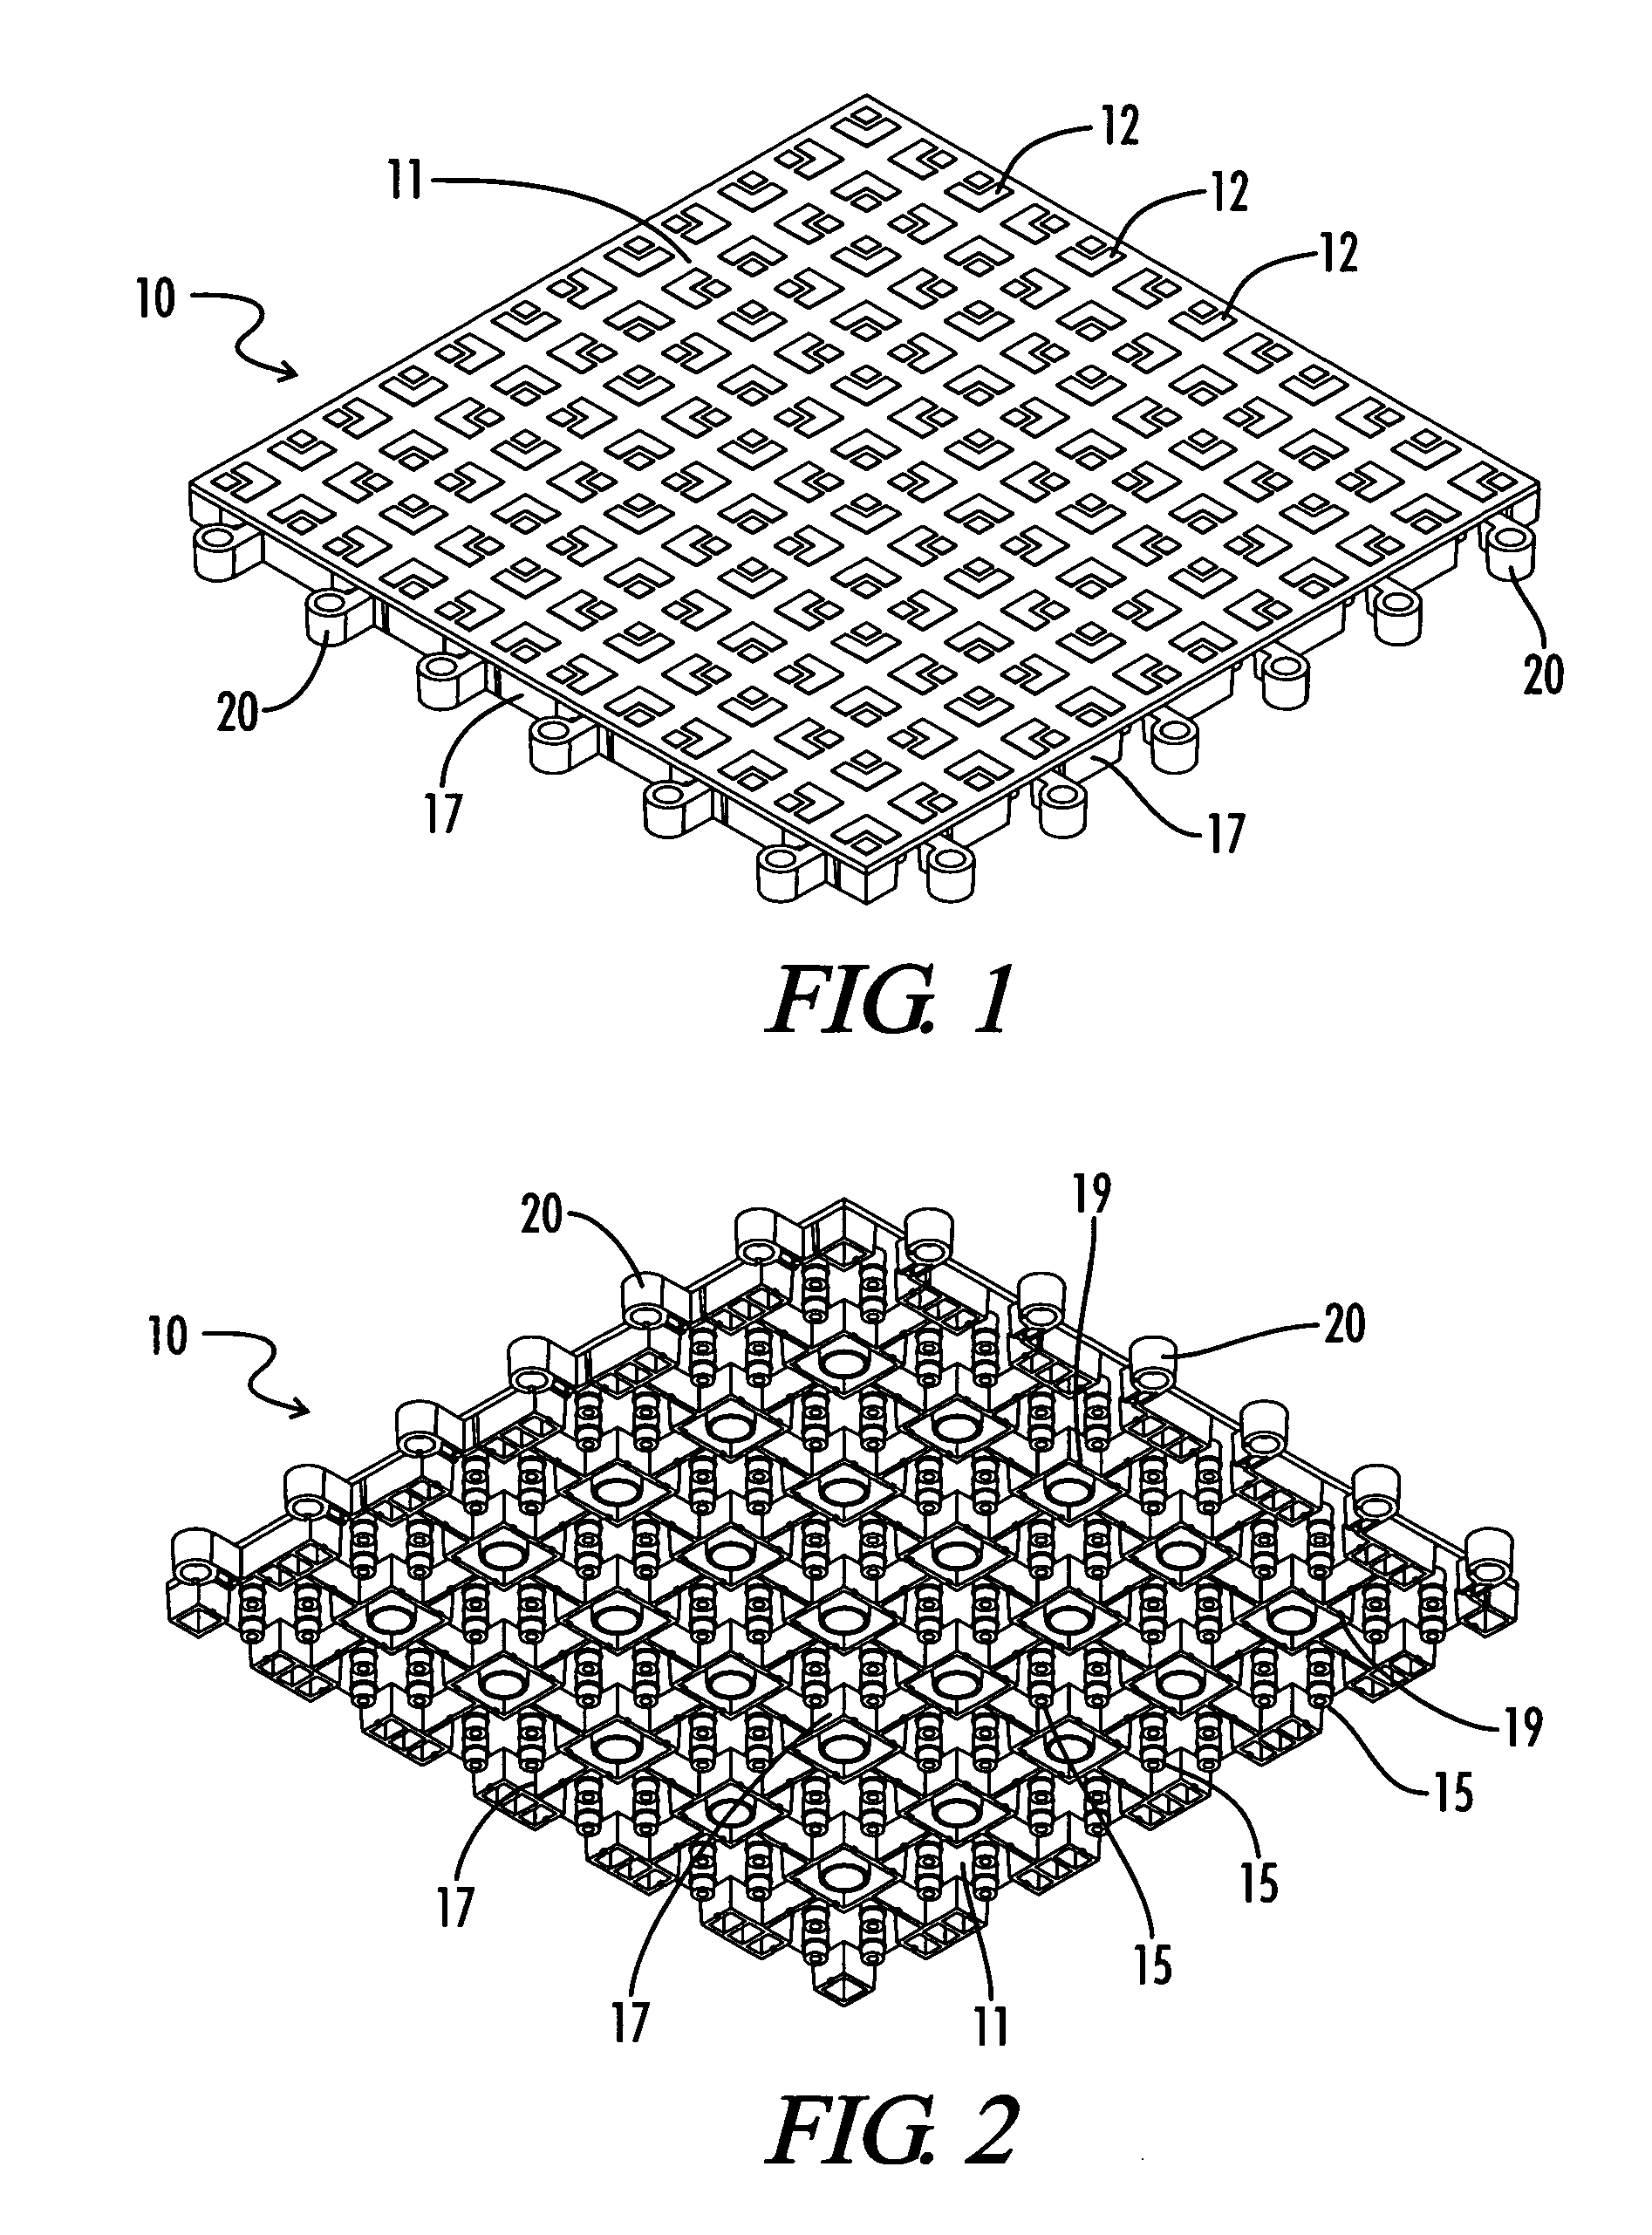 Interlocking modular floor tile